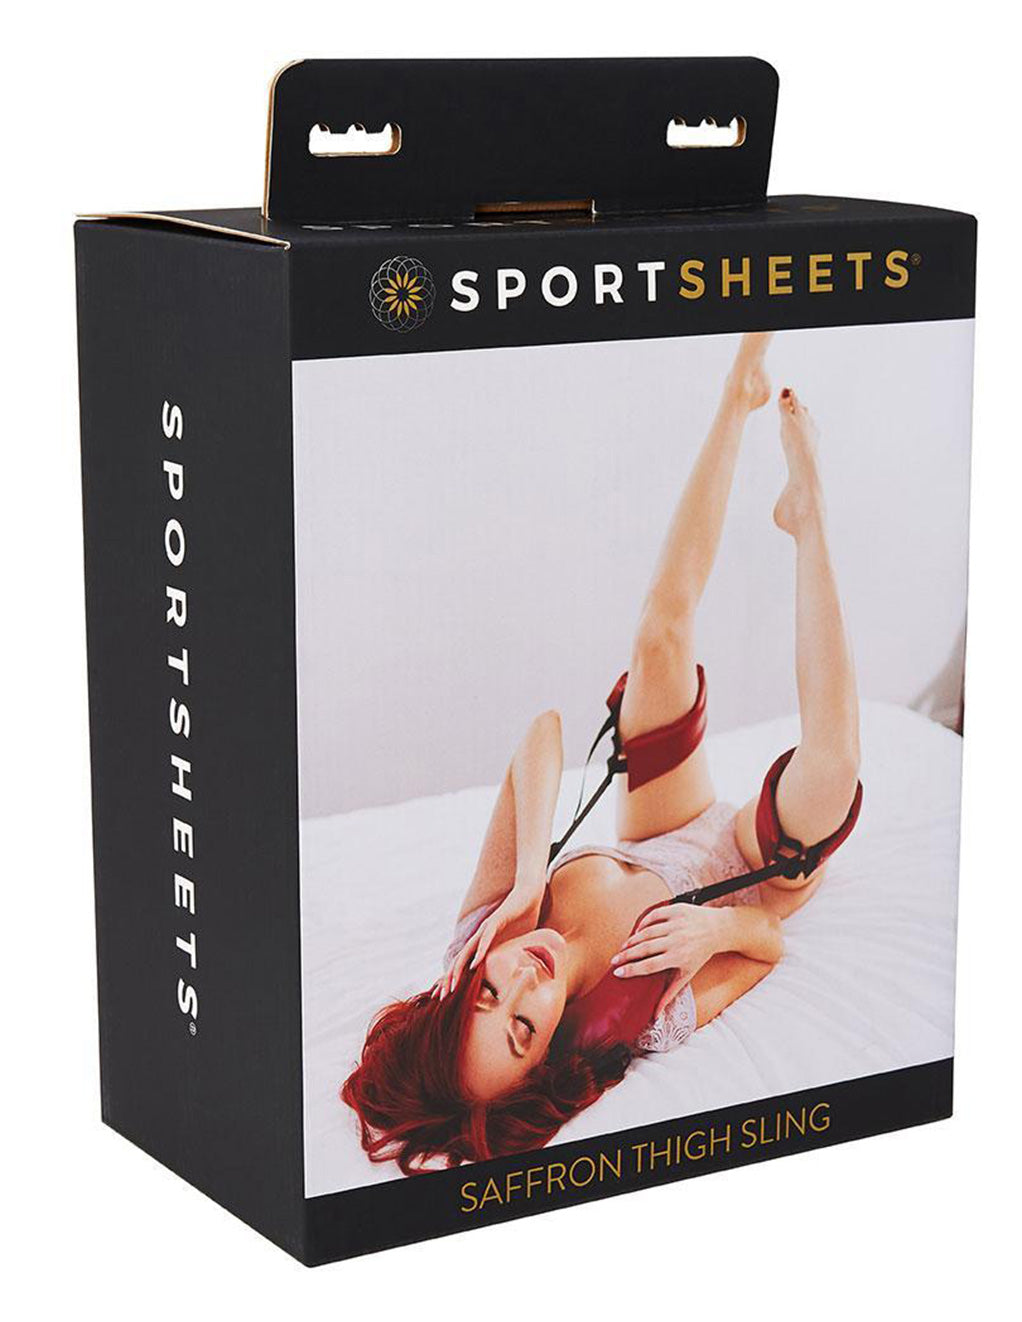 Saffron Thigh Sling By Sportsheets International Box Front